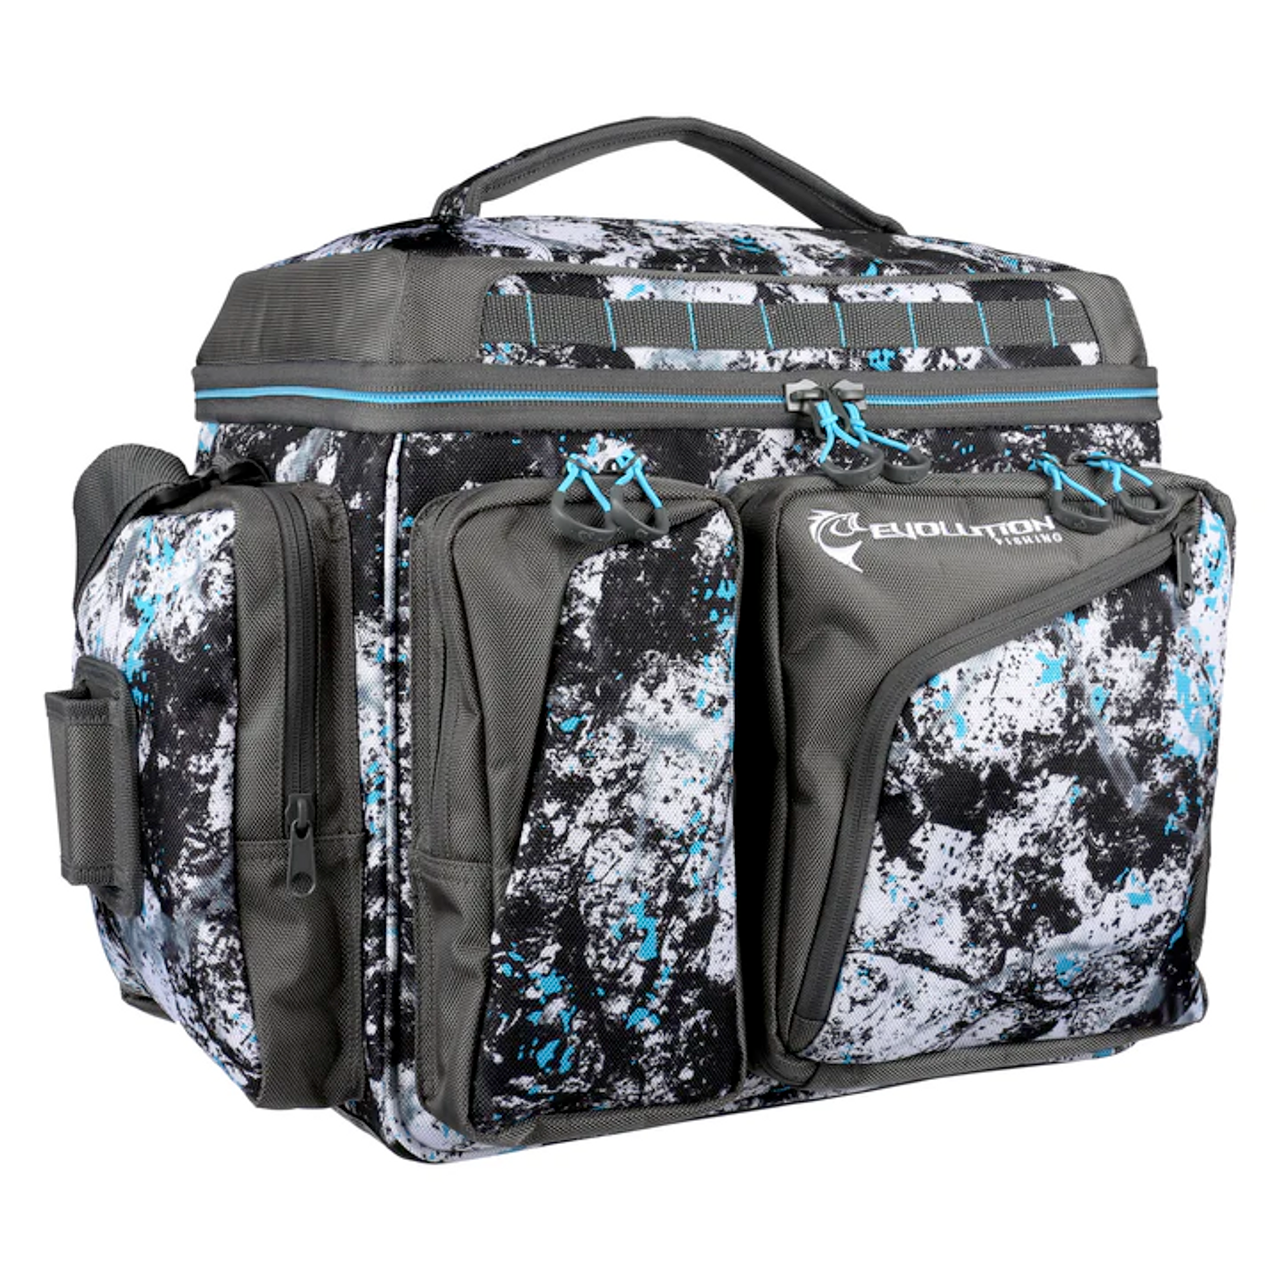 Evolution Largemouth XL 3700 Tackle Bag, Quartz Blue,  Includes 6 Trays